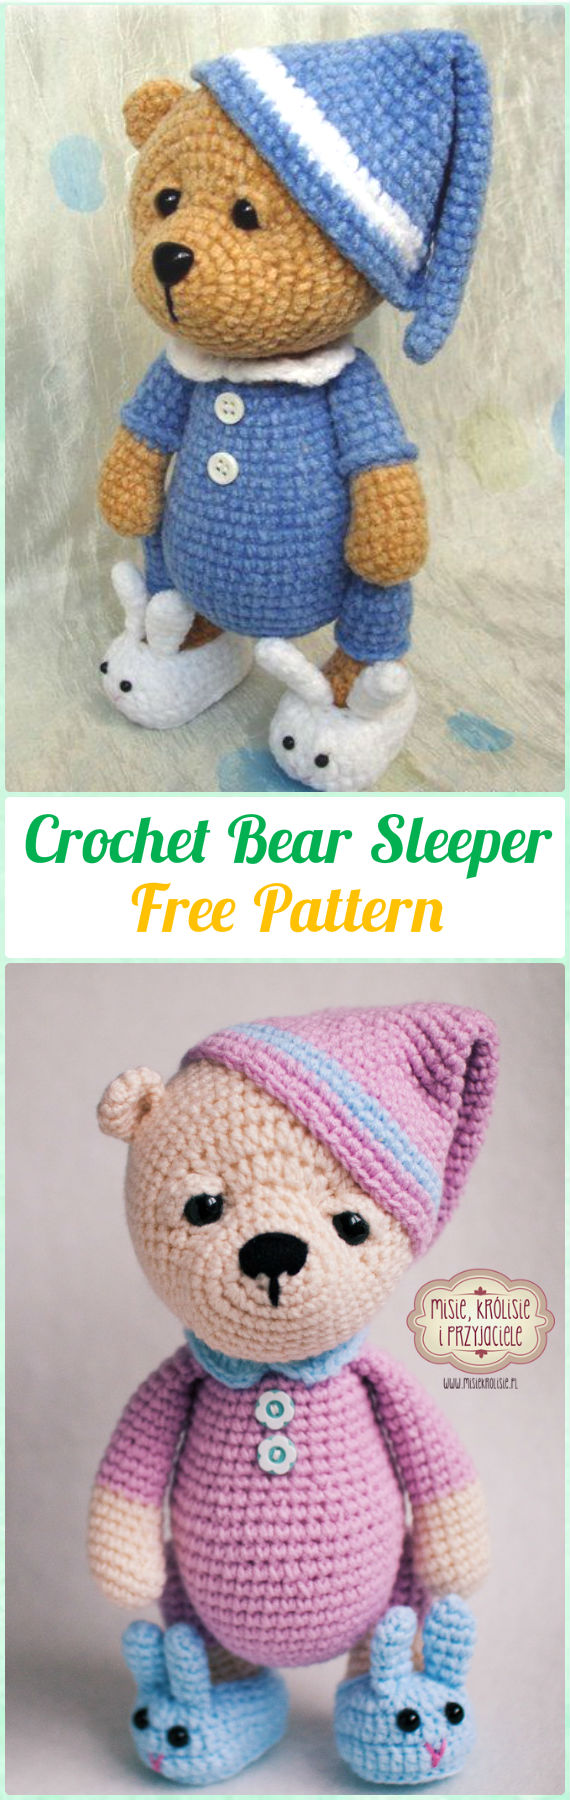 Amigurumi Crochet Bear Sleeper Free Pattern - Amigurumi Crochet Teddy Bear Toys Free Patterns 